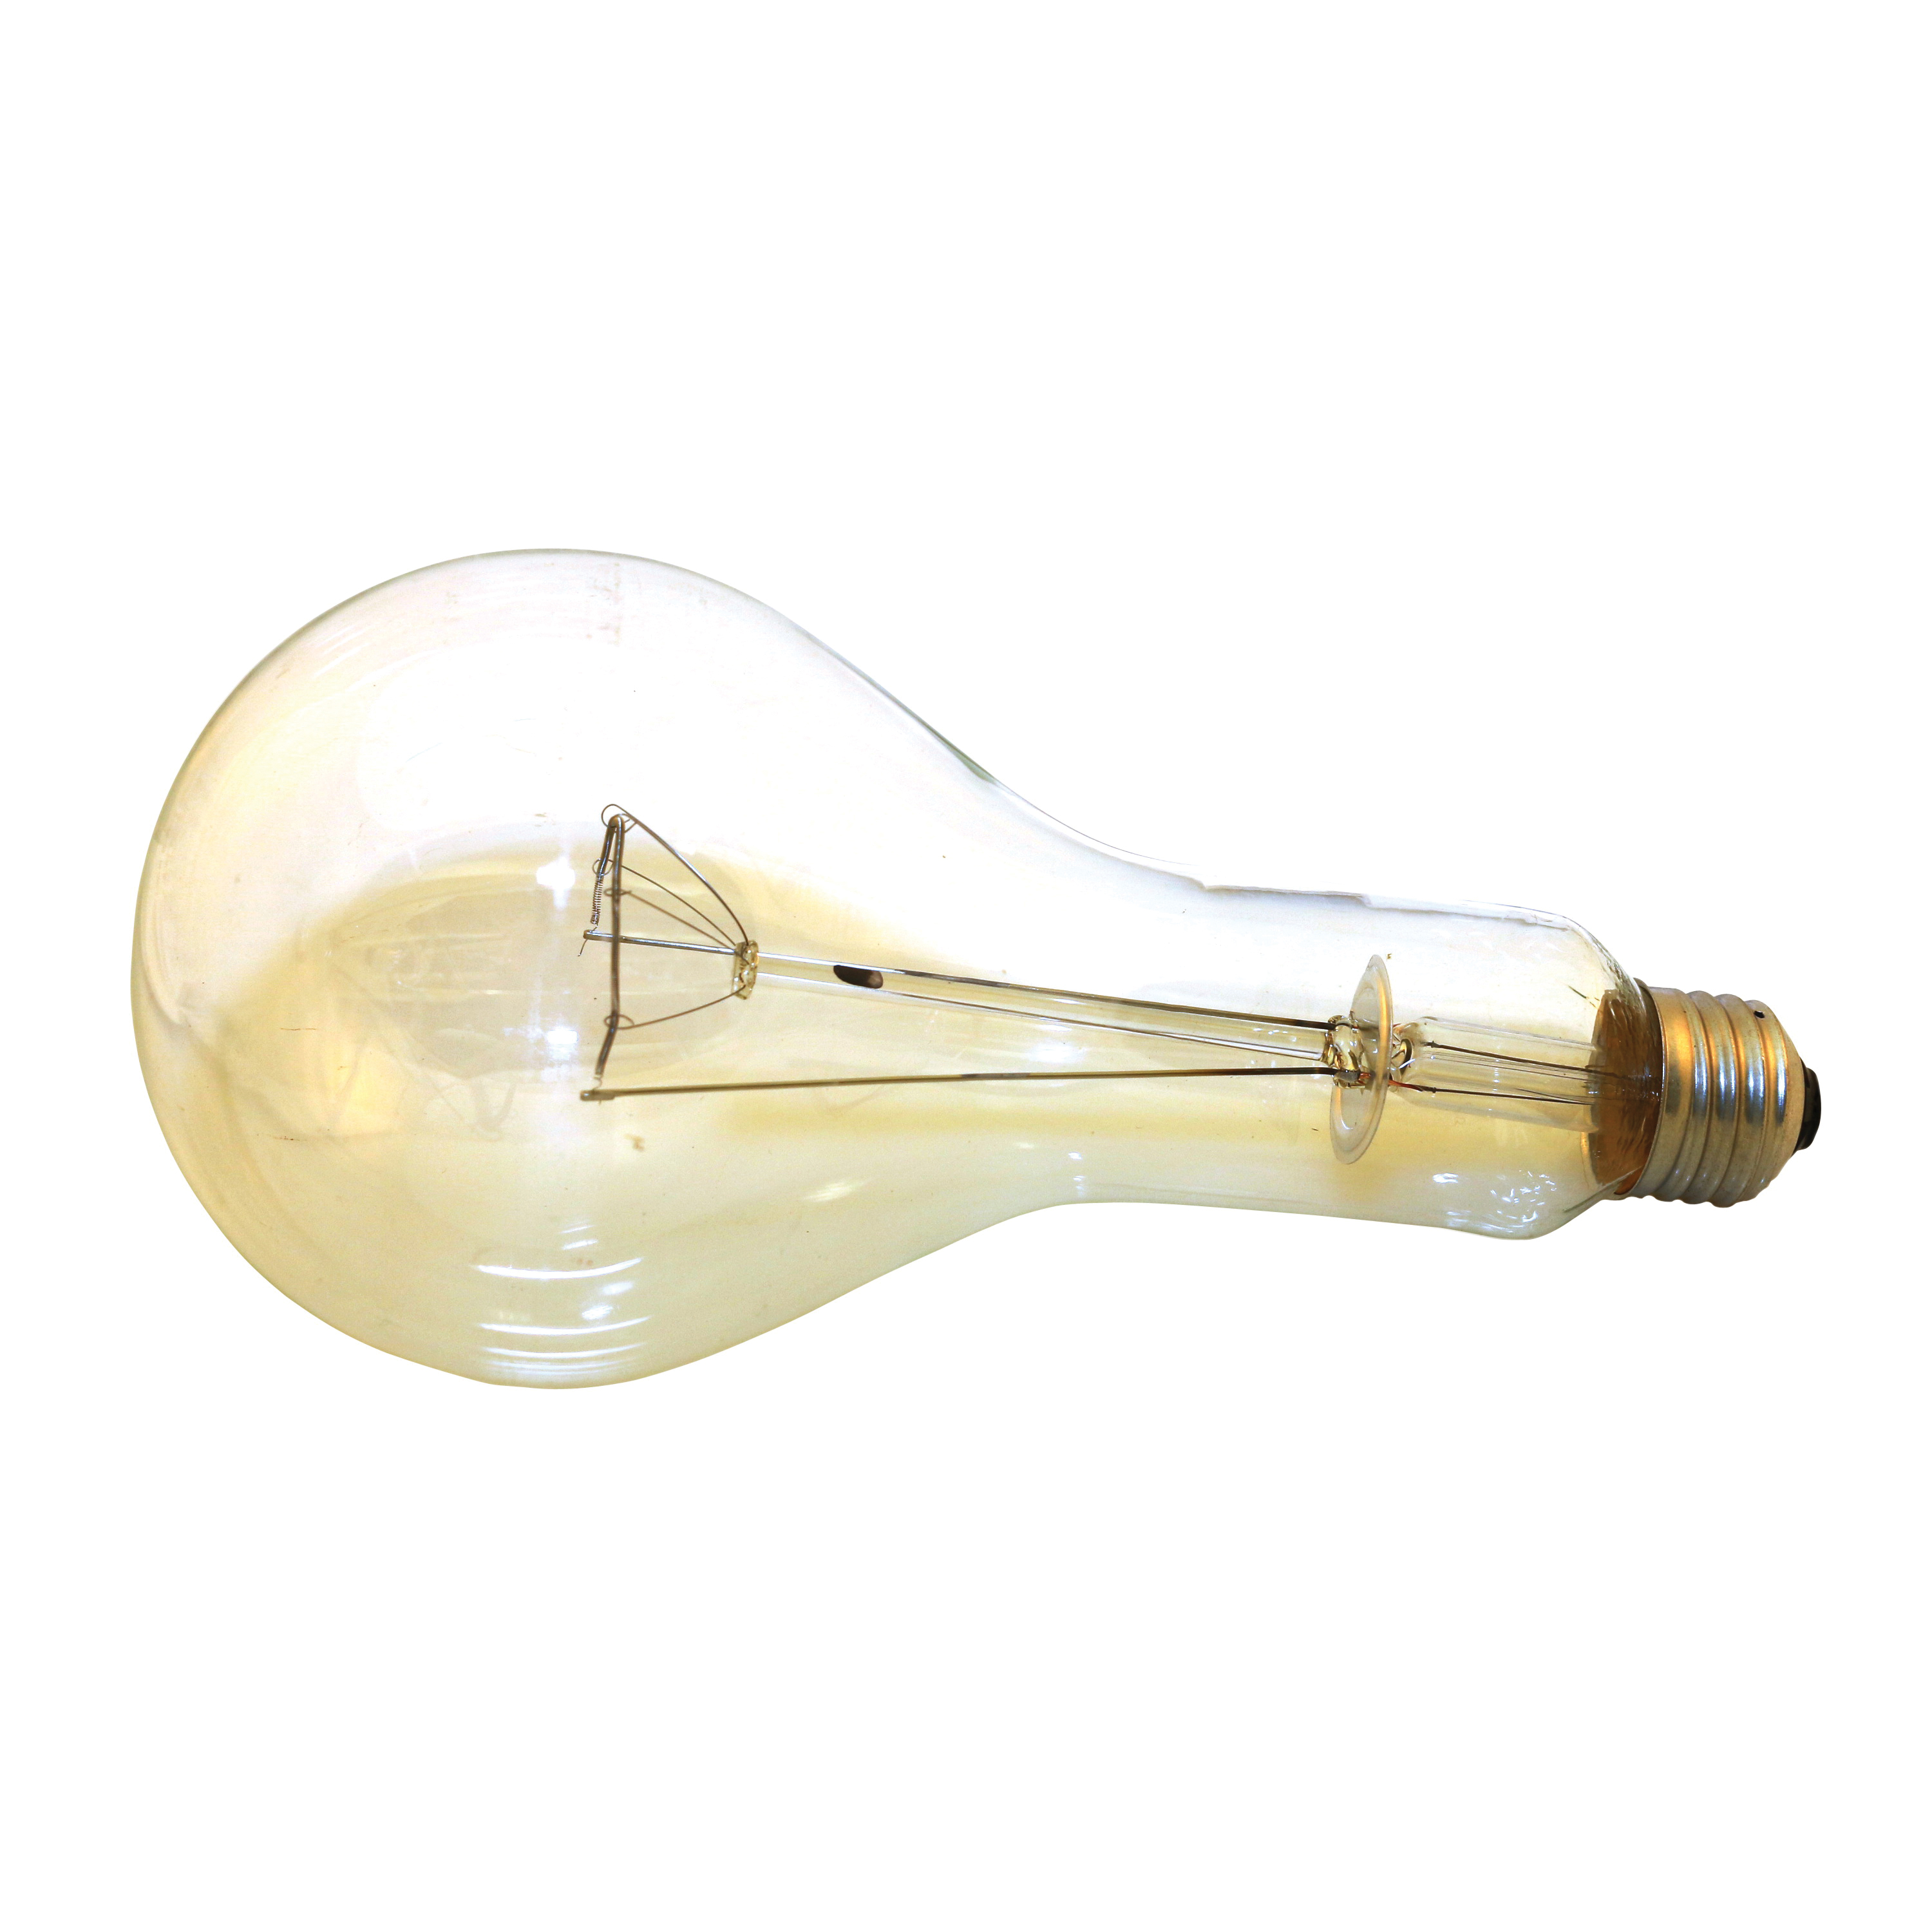 Sylvania 15740 Incandescent Lamp, 300 W, PS30 Lamp, Medium Lamp Base, 5870 Lumens, 2850 K Color Temp - 1